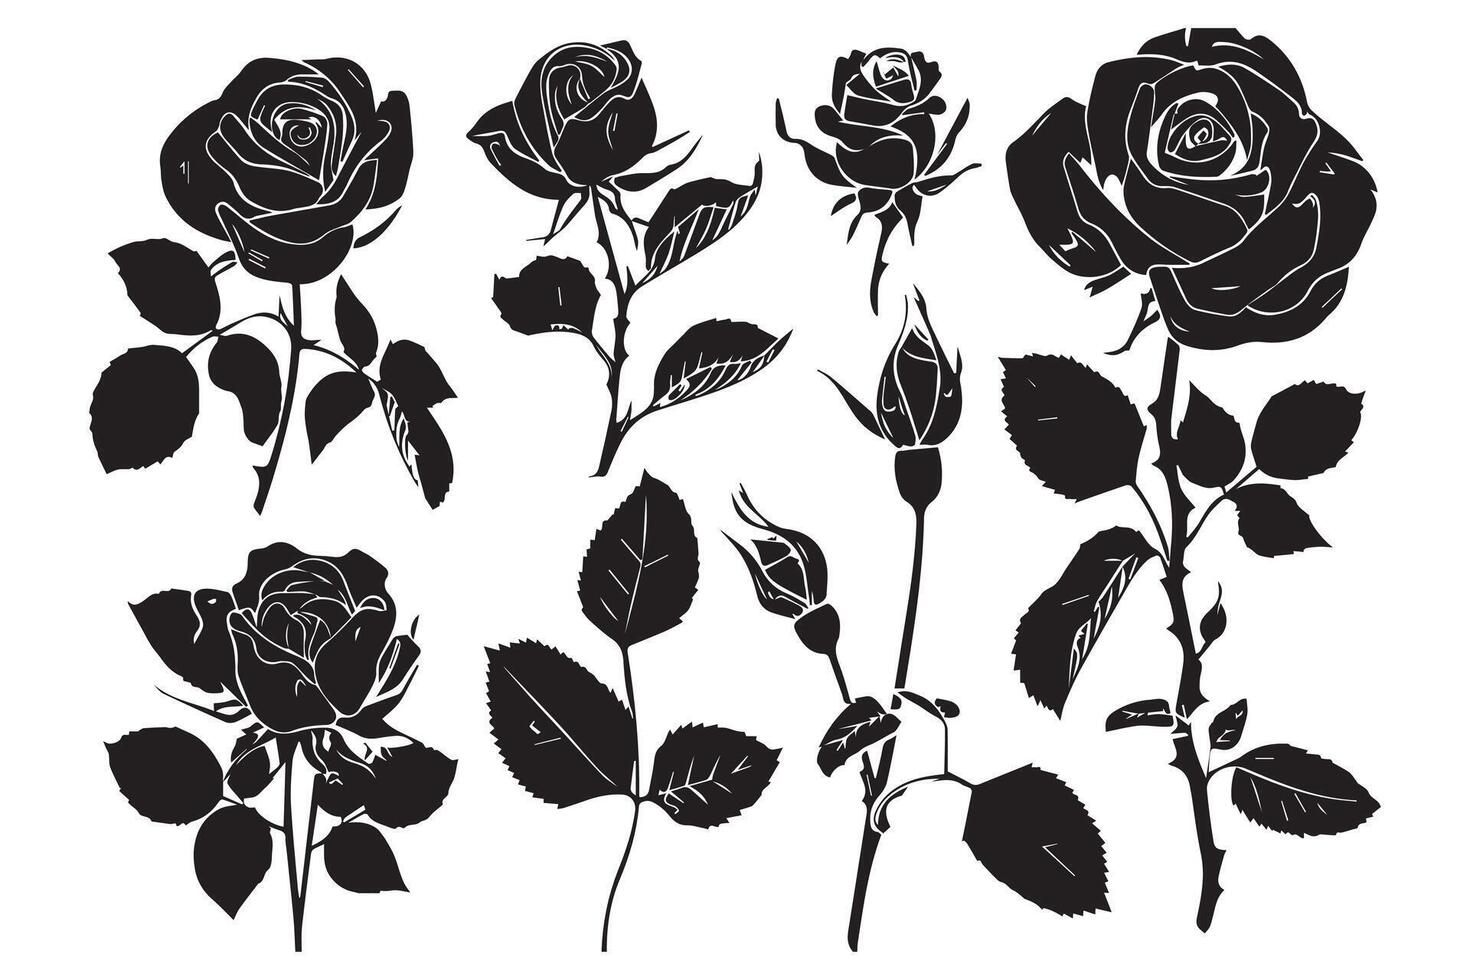 negro silueta conjunto de Rosa con hojas flor negro silhoutte blanco antecedentes vector